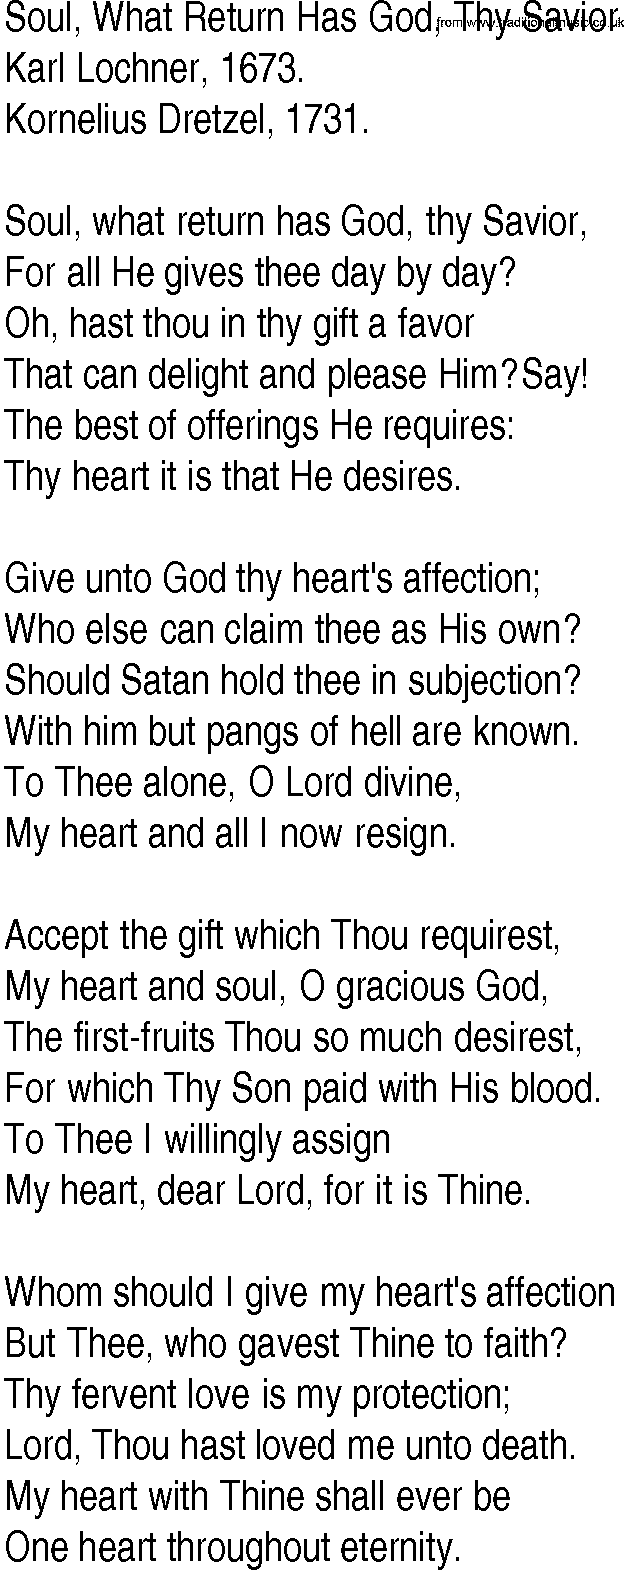 Hymn and Gospel Song: Soul, What Return Has God, Thy Savior by Karl Lochner lyrics